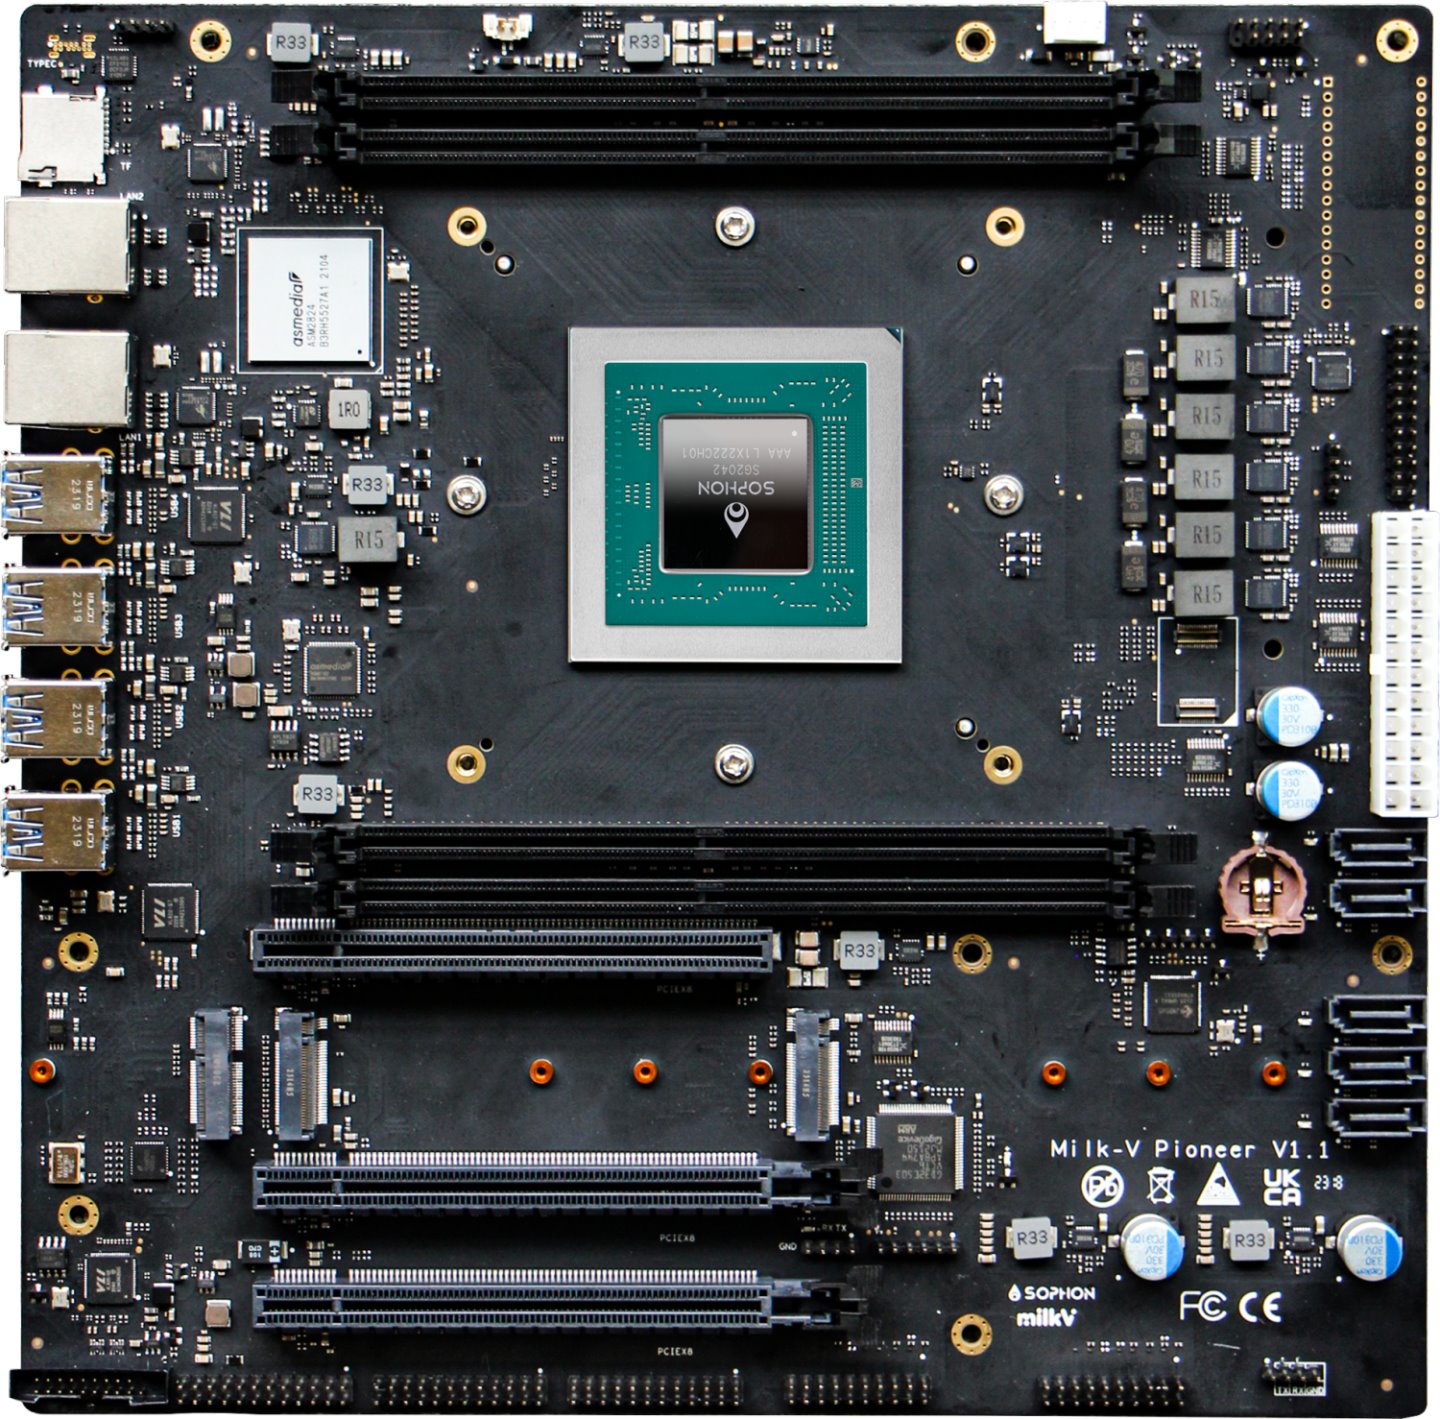 Milk-V Pioneer是整合64核心RISC-V架構處理器的Micro ATX主機板。